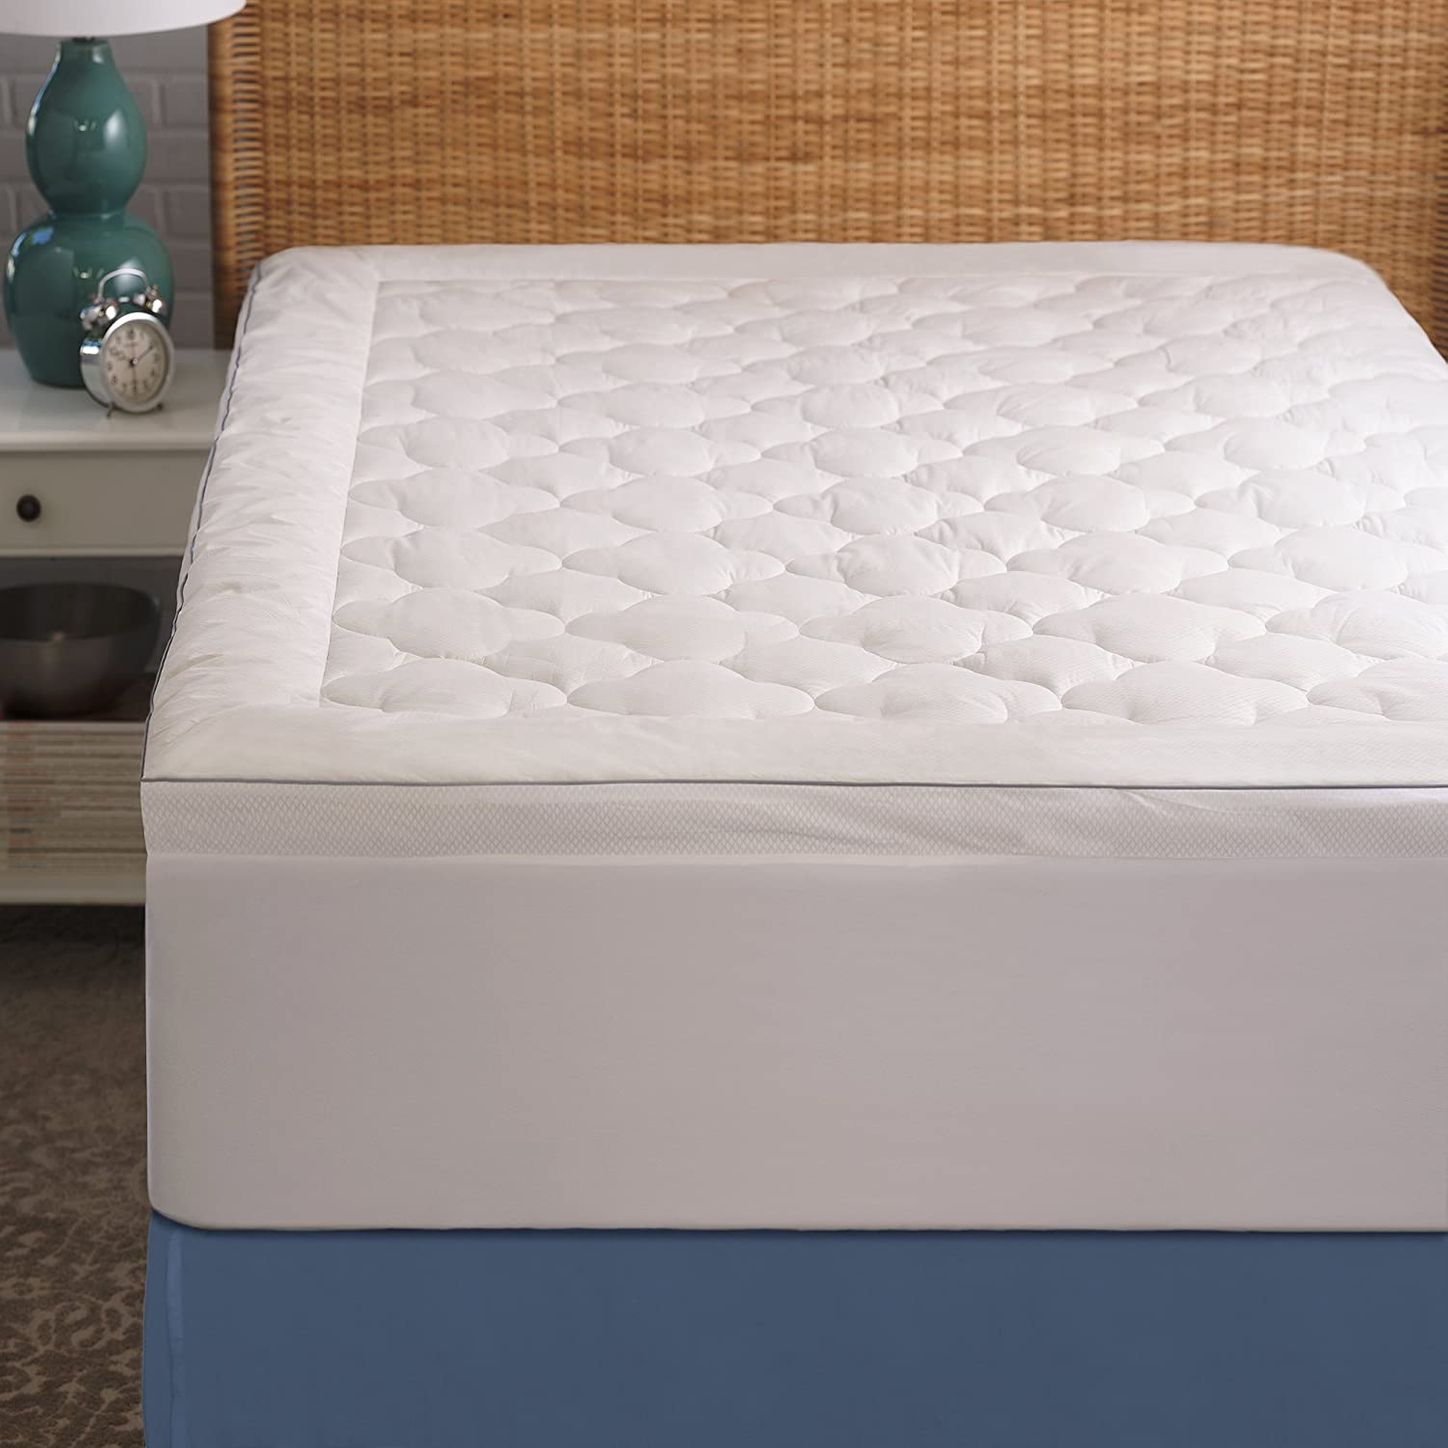 michael breus mattress cooling pad